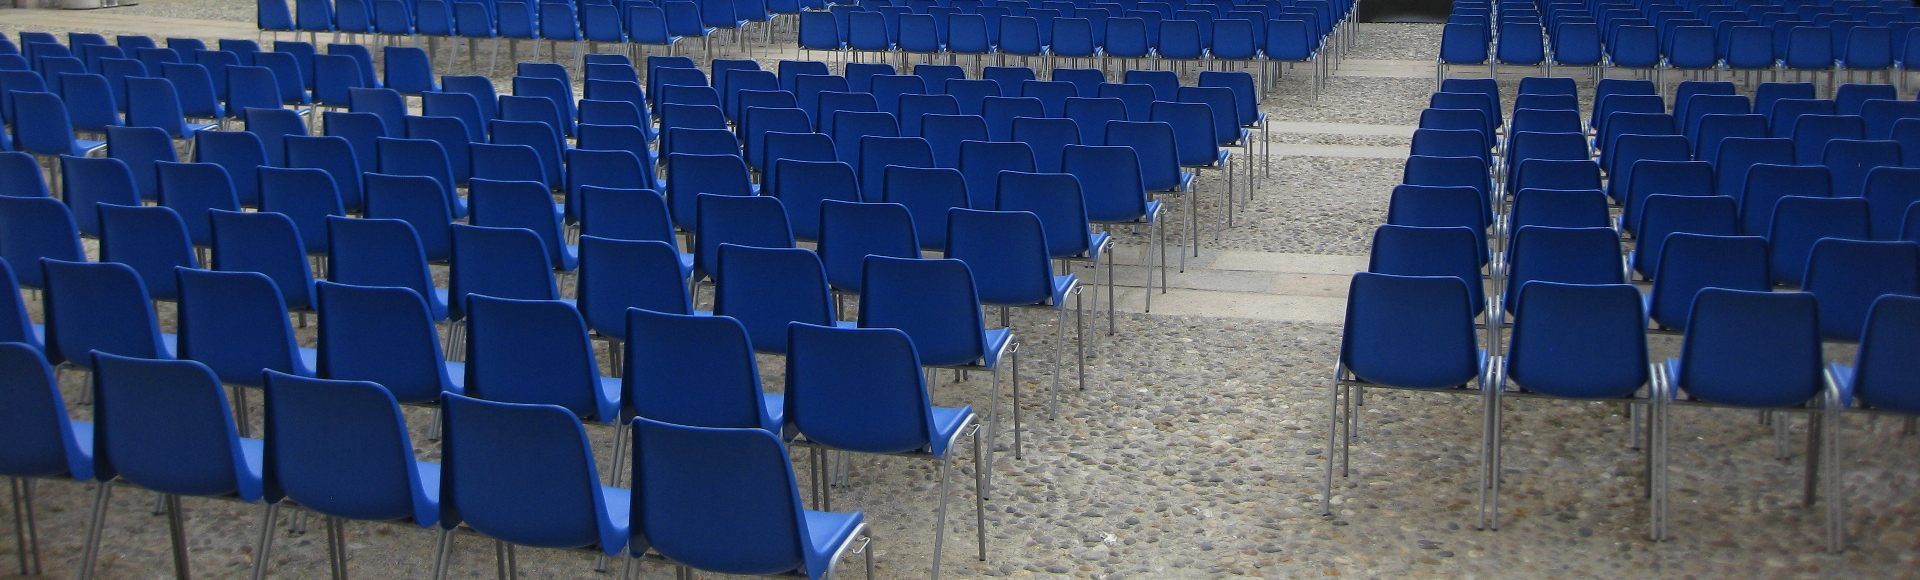 sedie per conferenze